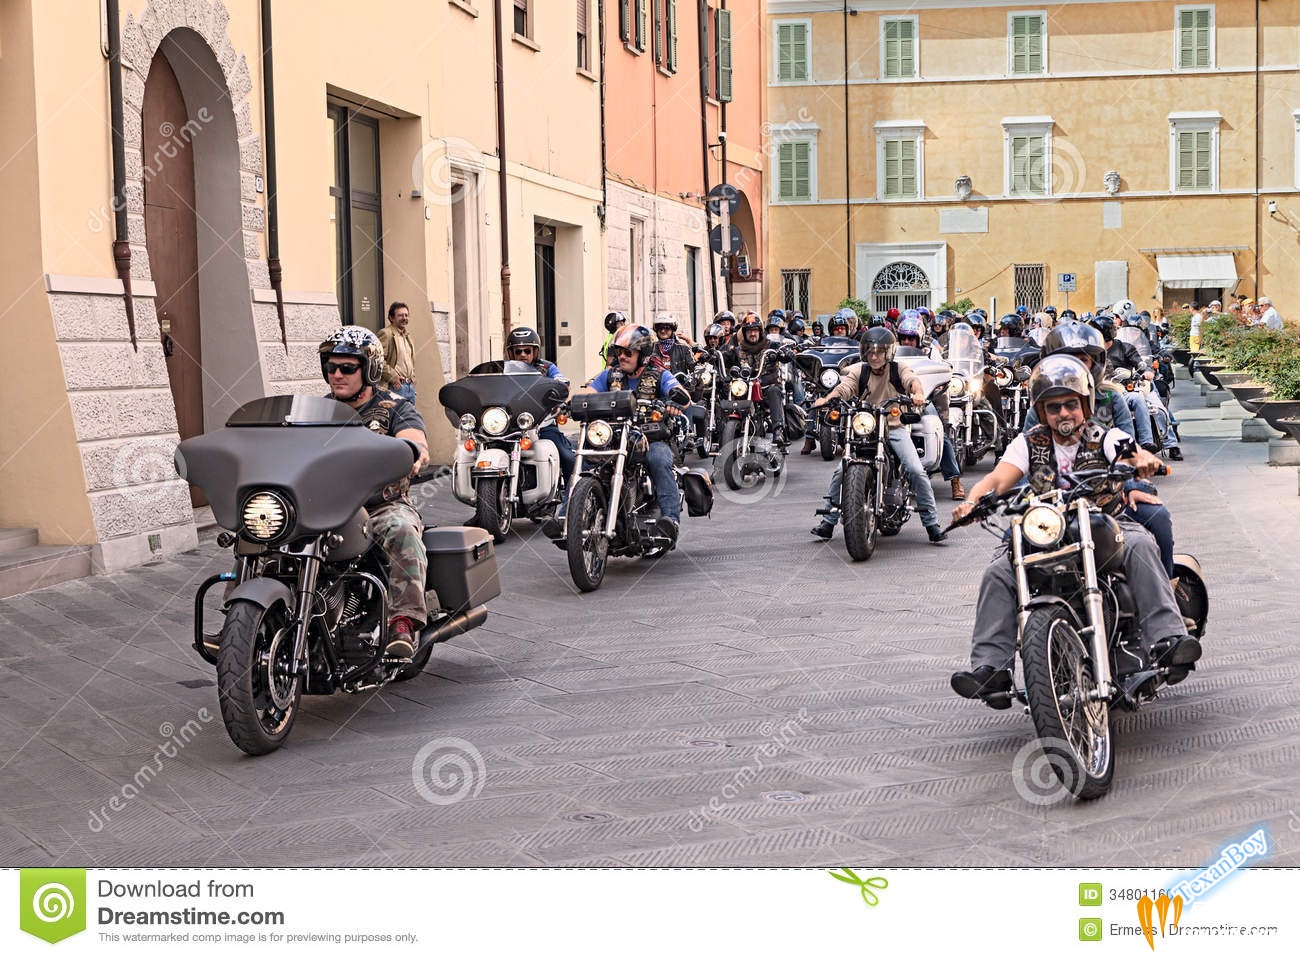 bikers-riding-harley-davidson-group-american-motorbikes-motorcycle-rally-sangiov.jpg